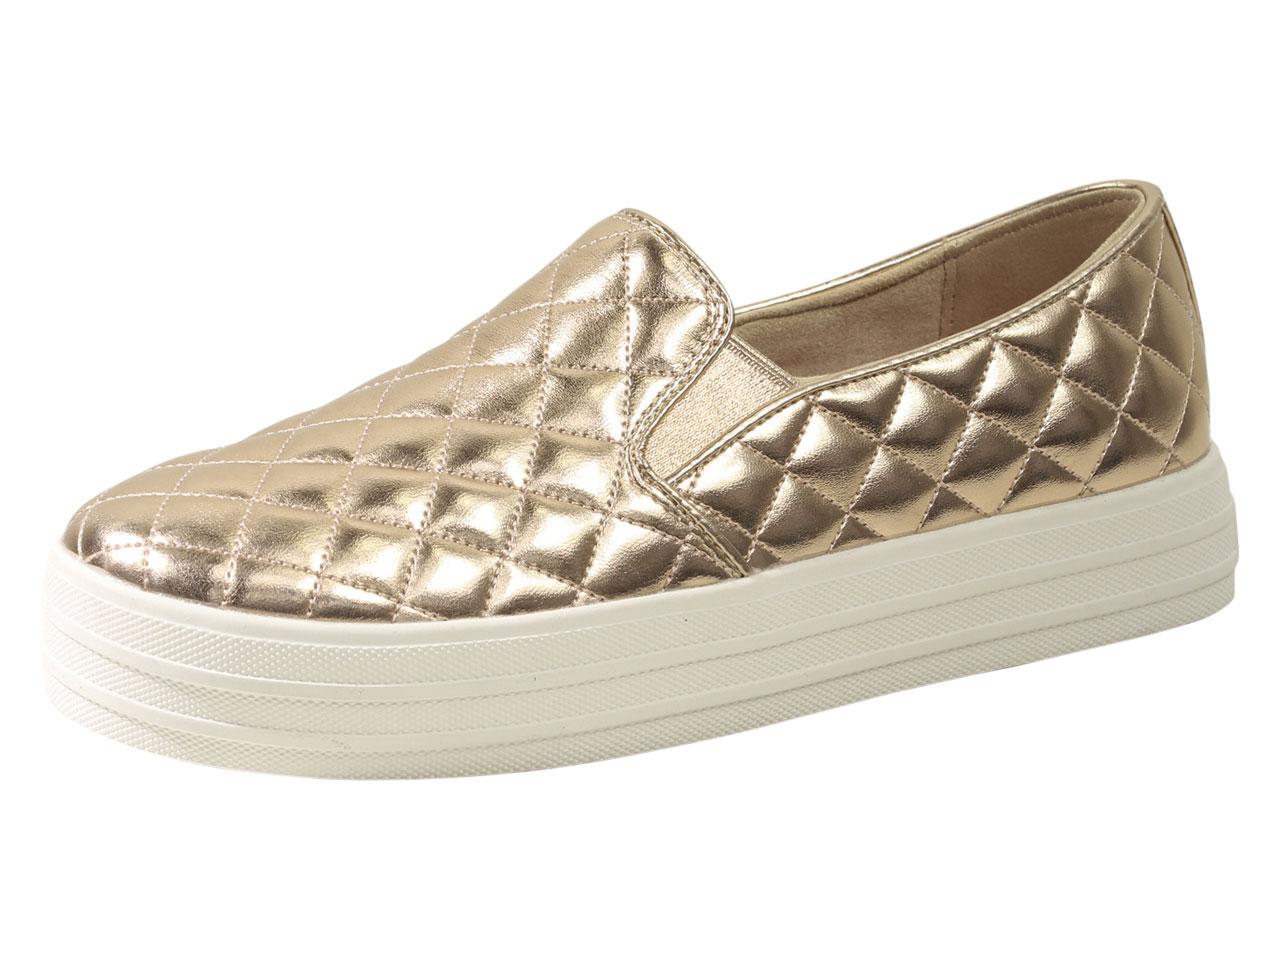 Skechers Women's Double Up Duvet Memory Foam Loafers Shoes - Rose Gold - 6.5 B(M) US